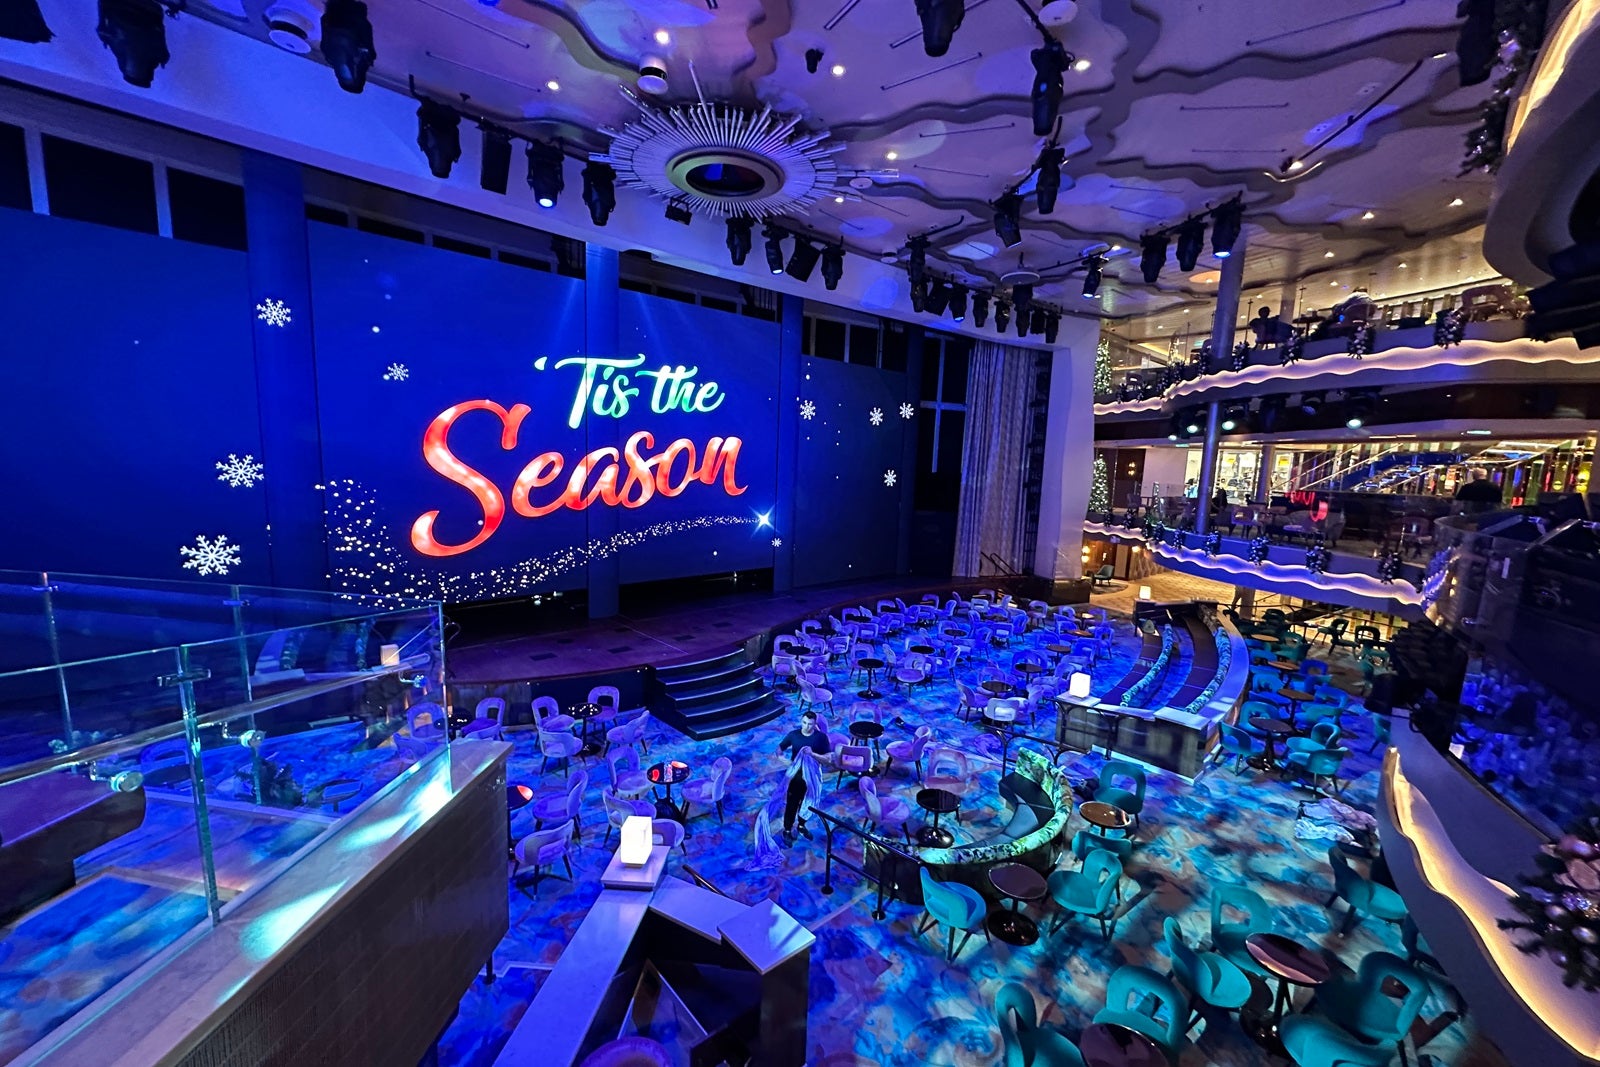 A cruise ship atrium's LED screen displays a "'Tis the Season" holiday message